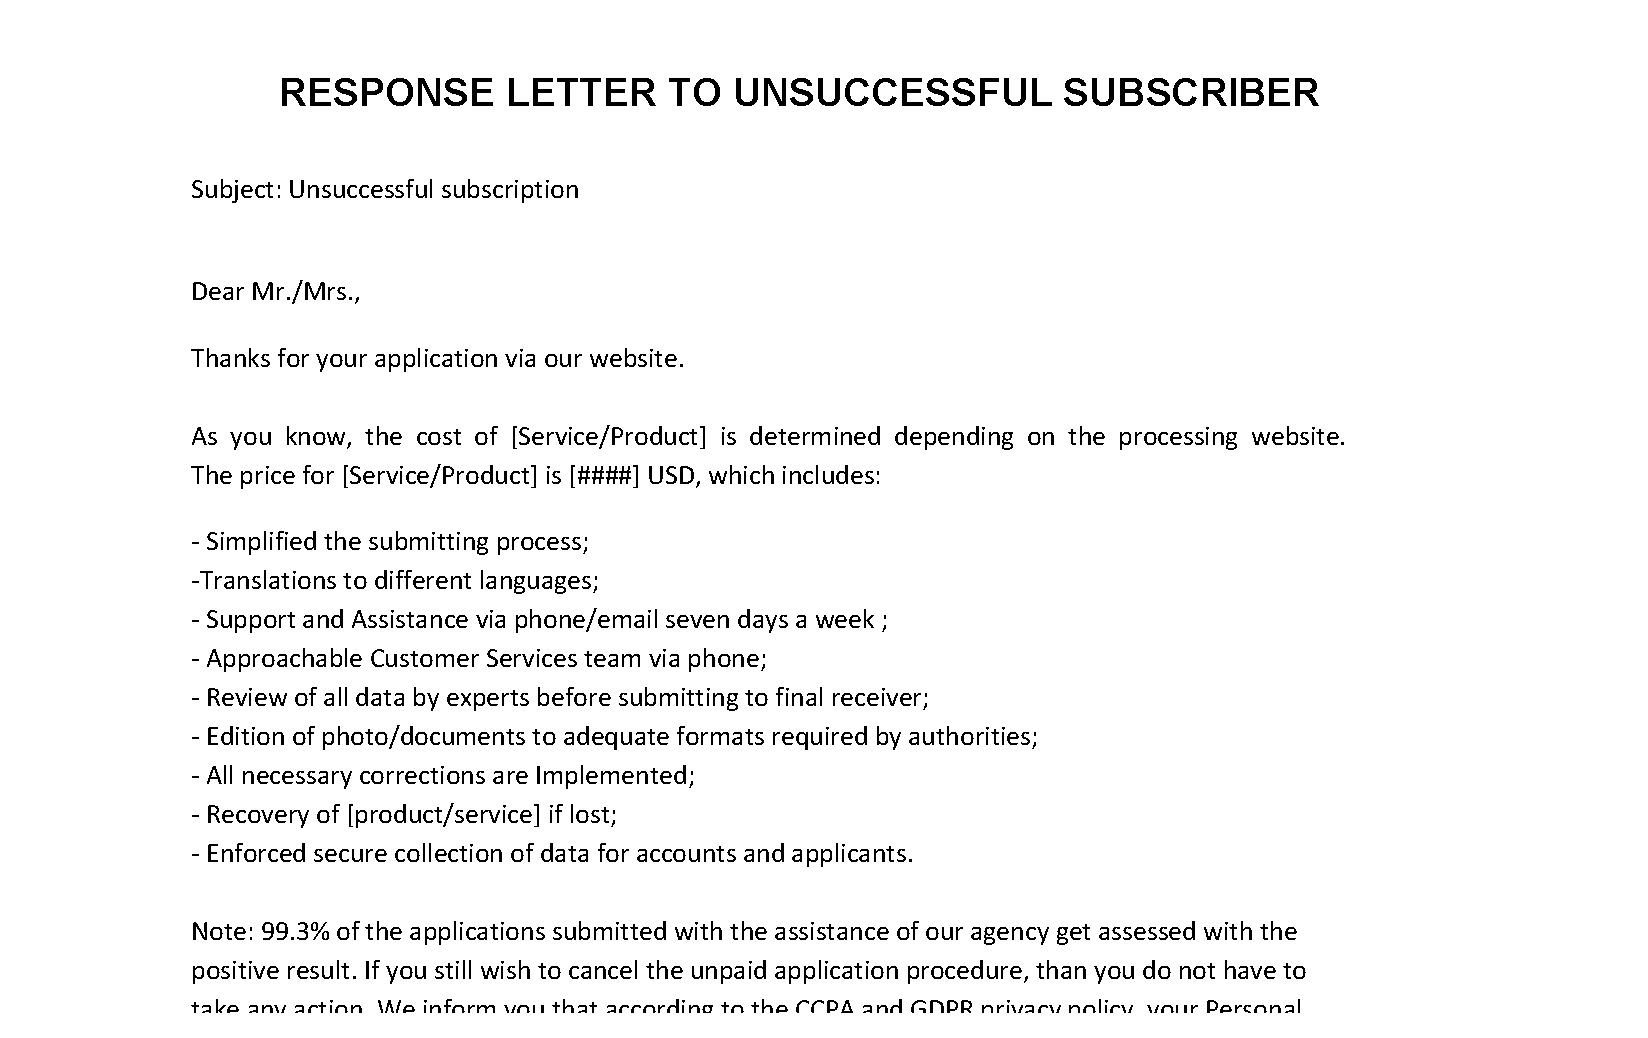 ccpa response letter to unsuccessful subscriber Hauptschablonenbild